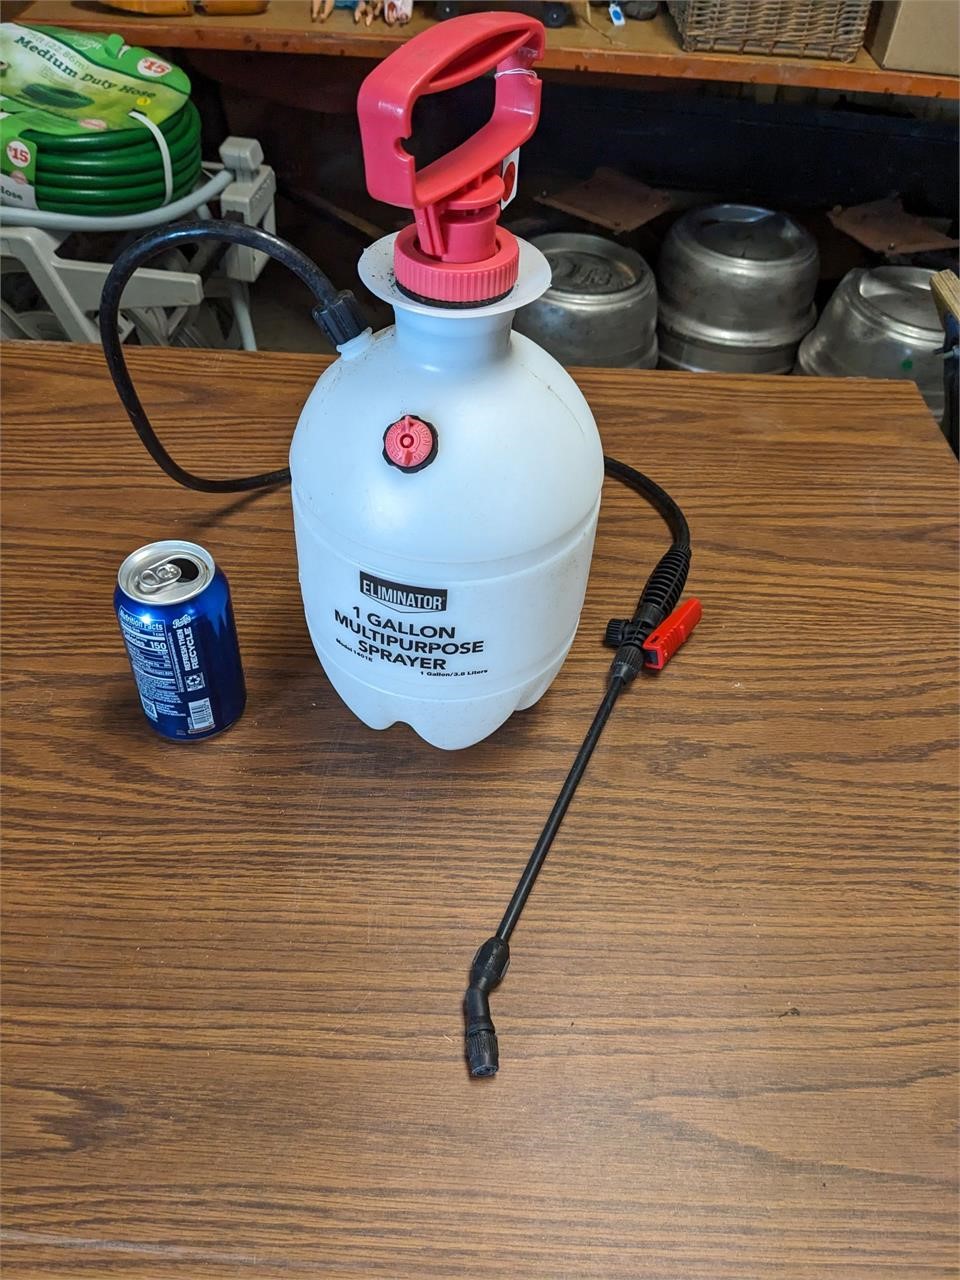 Eliminator Multipurpose Sprayer